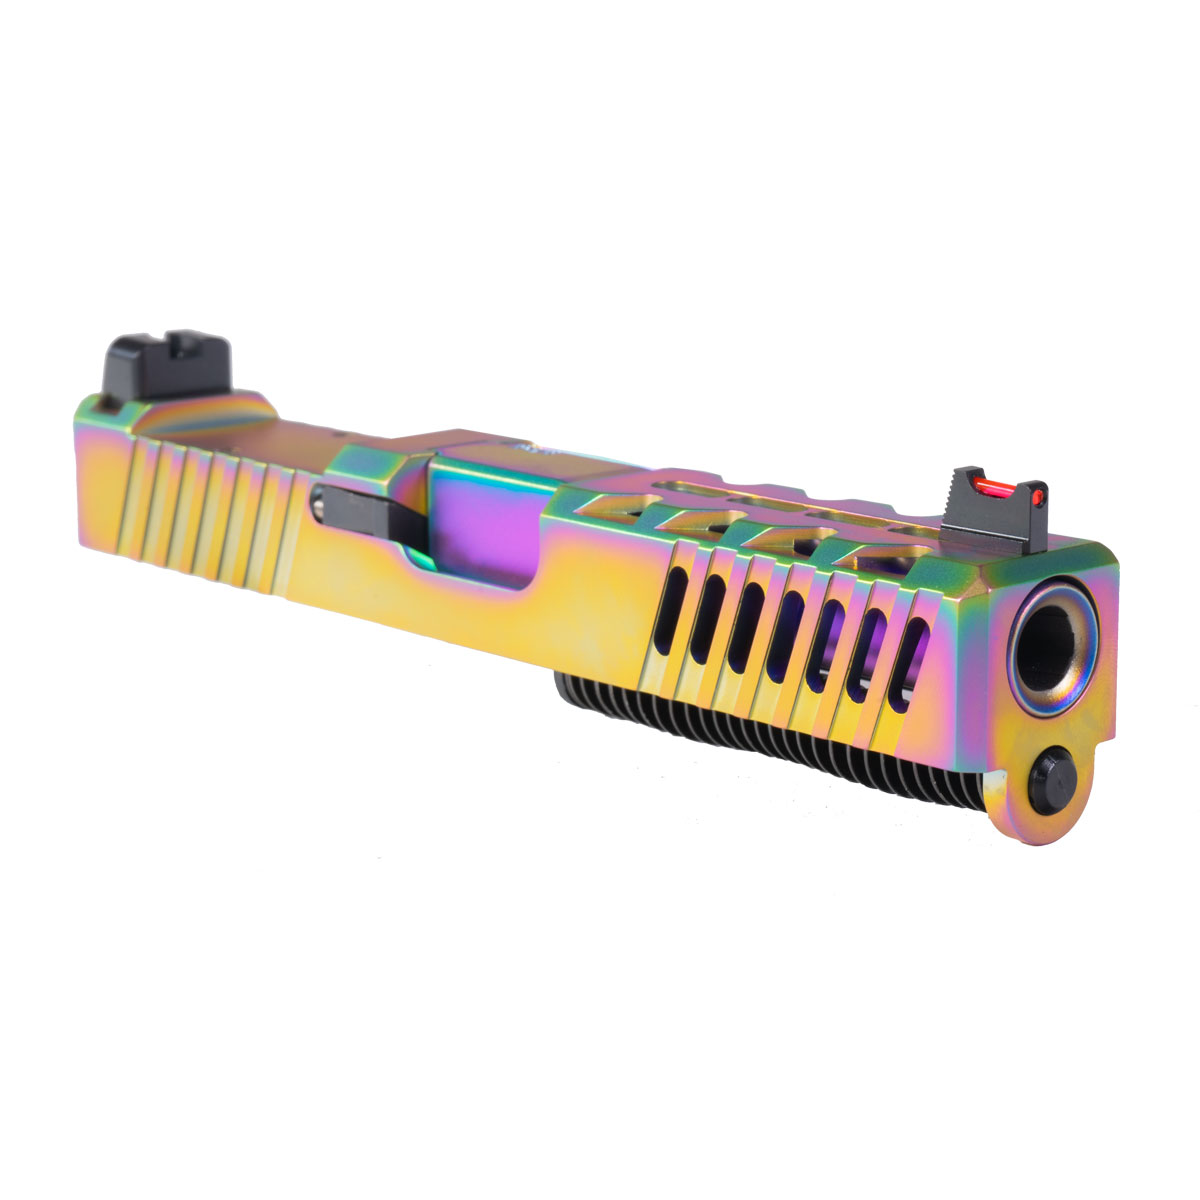 DTT 'Polychrome Pursuit' 9mm Complete Slide Kit - Glock 19 Gen 1-3 Compatible